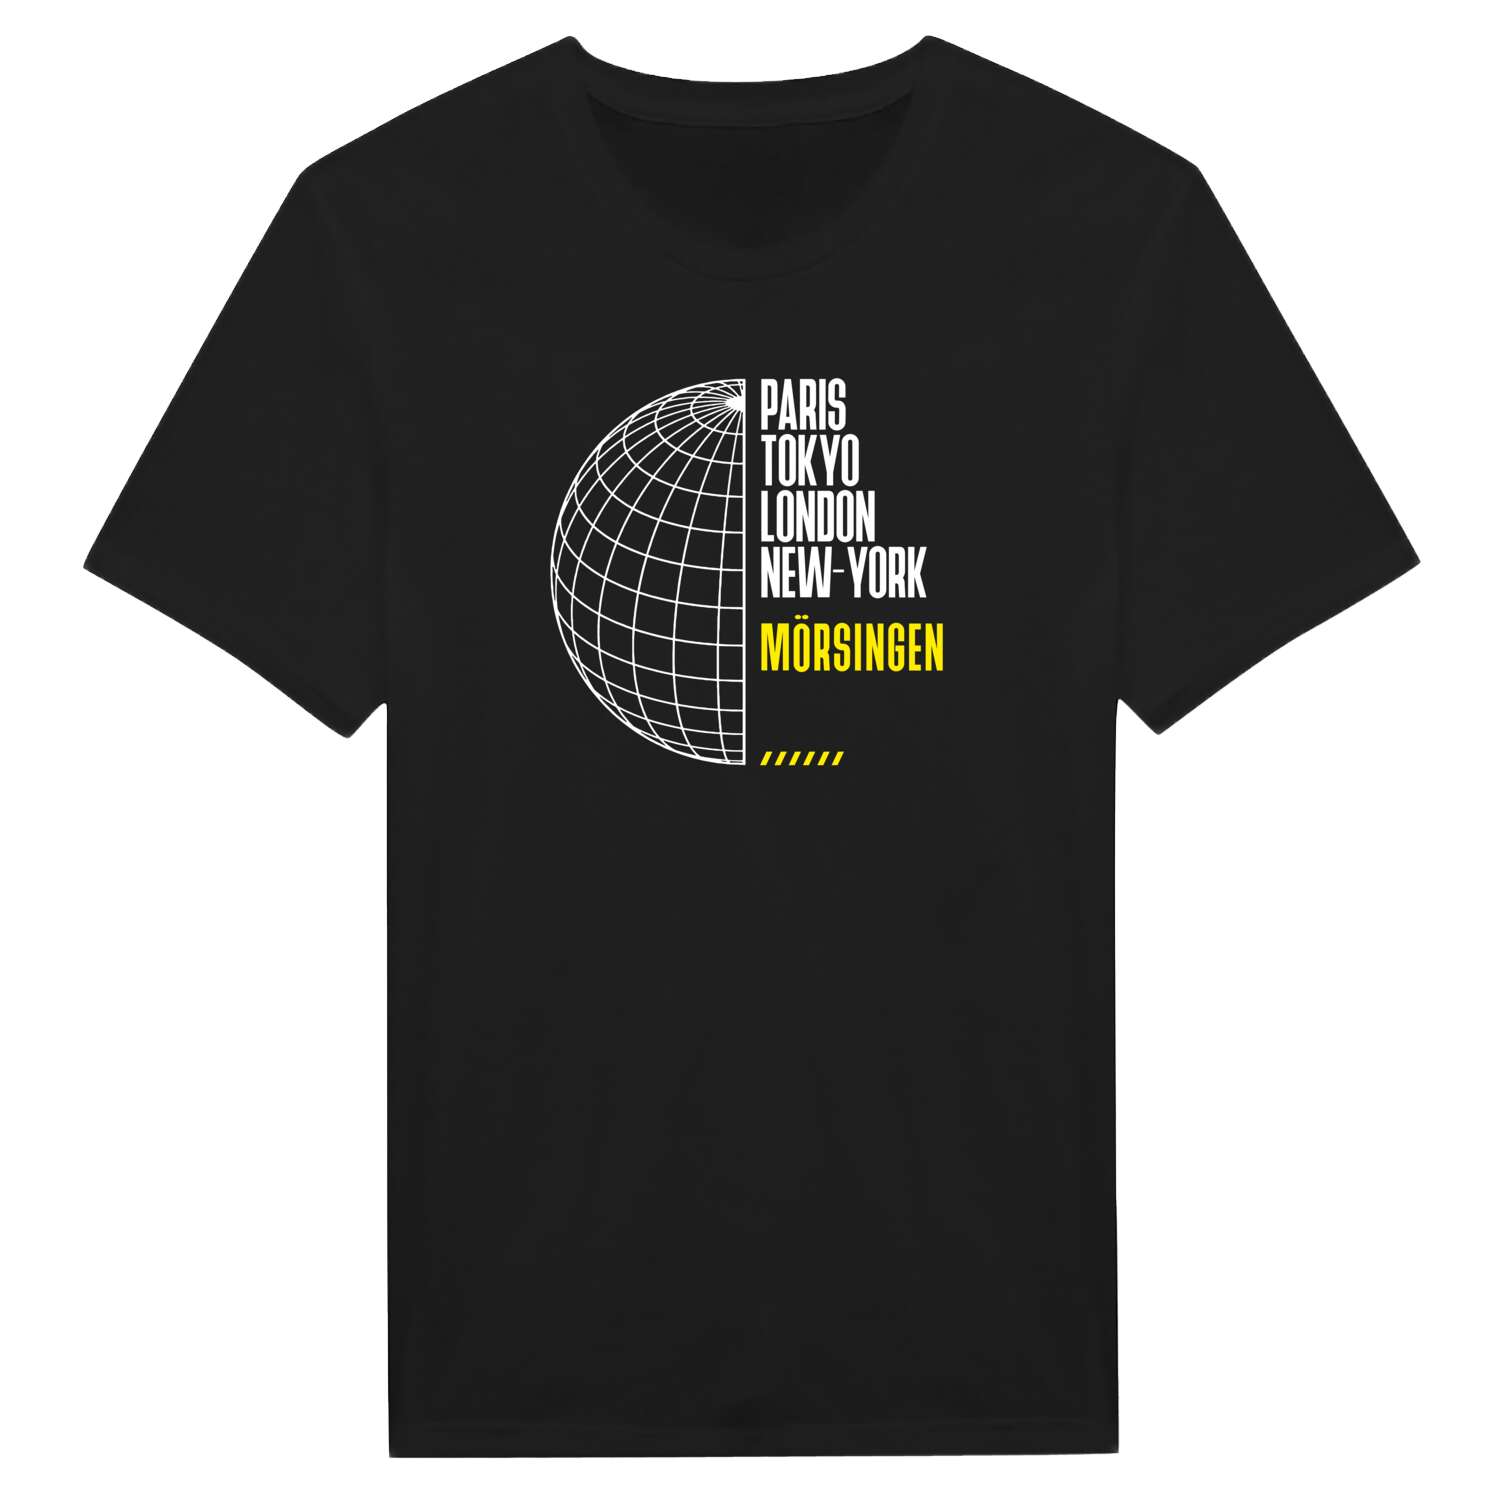 Mörsingen T-Shirt »Paris Tokyo London«